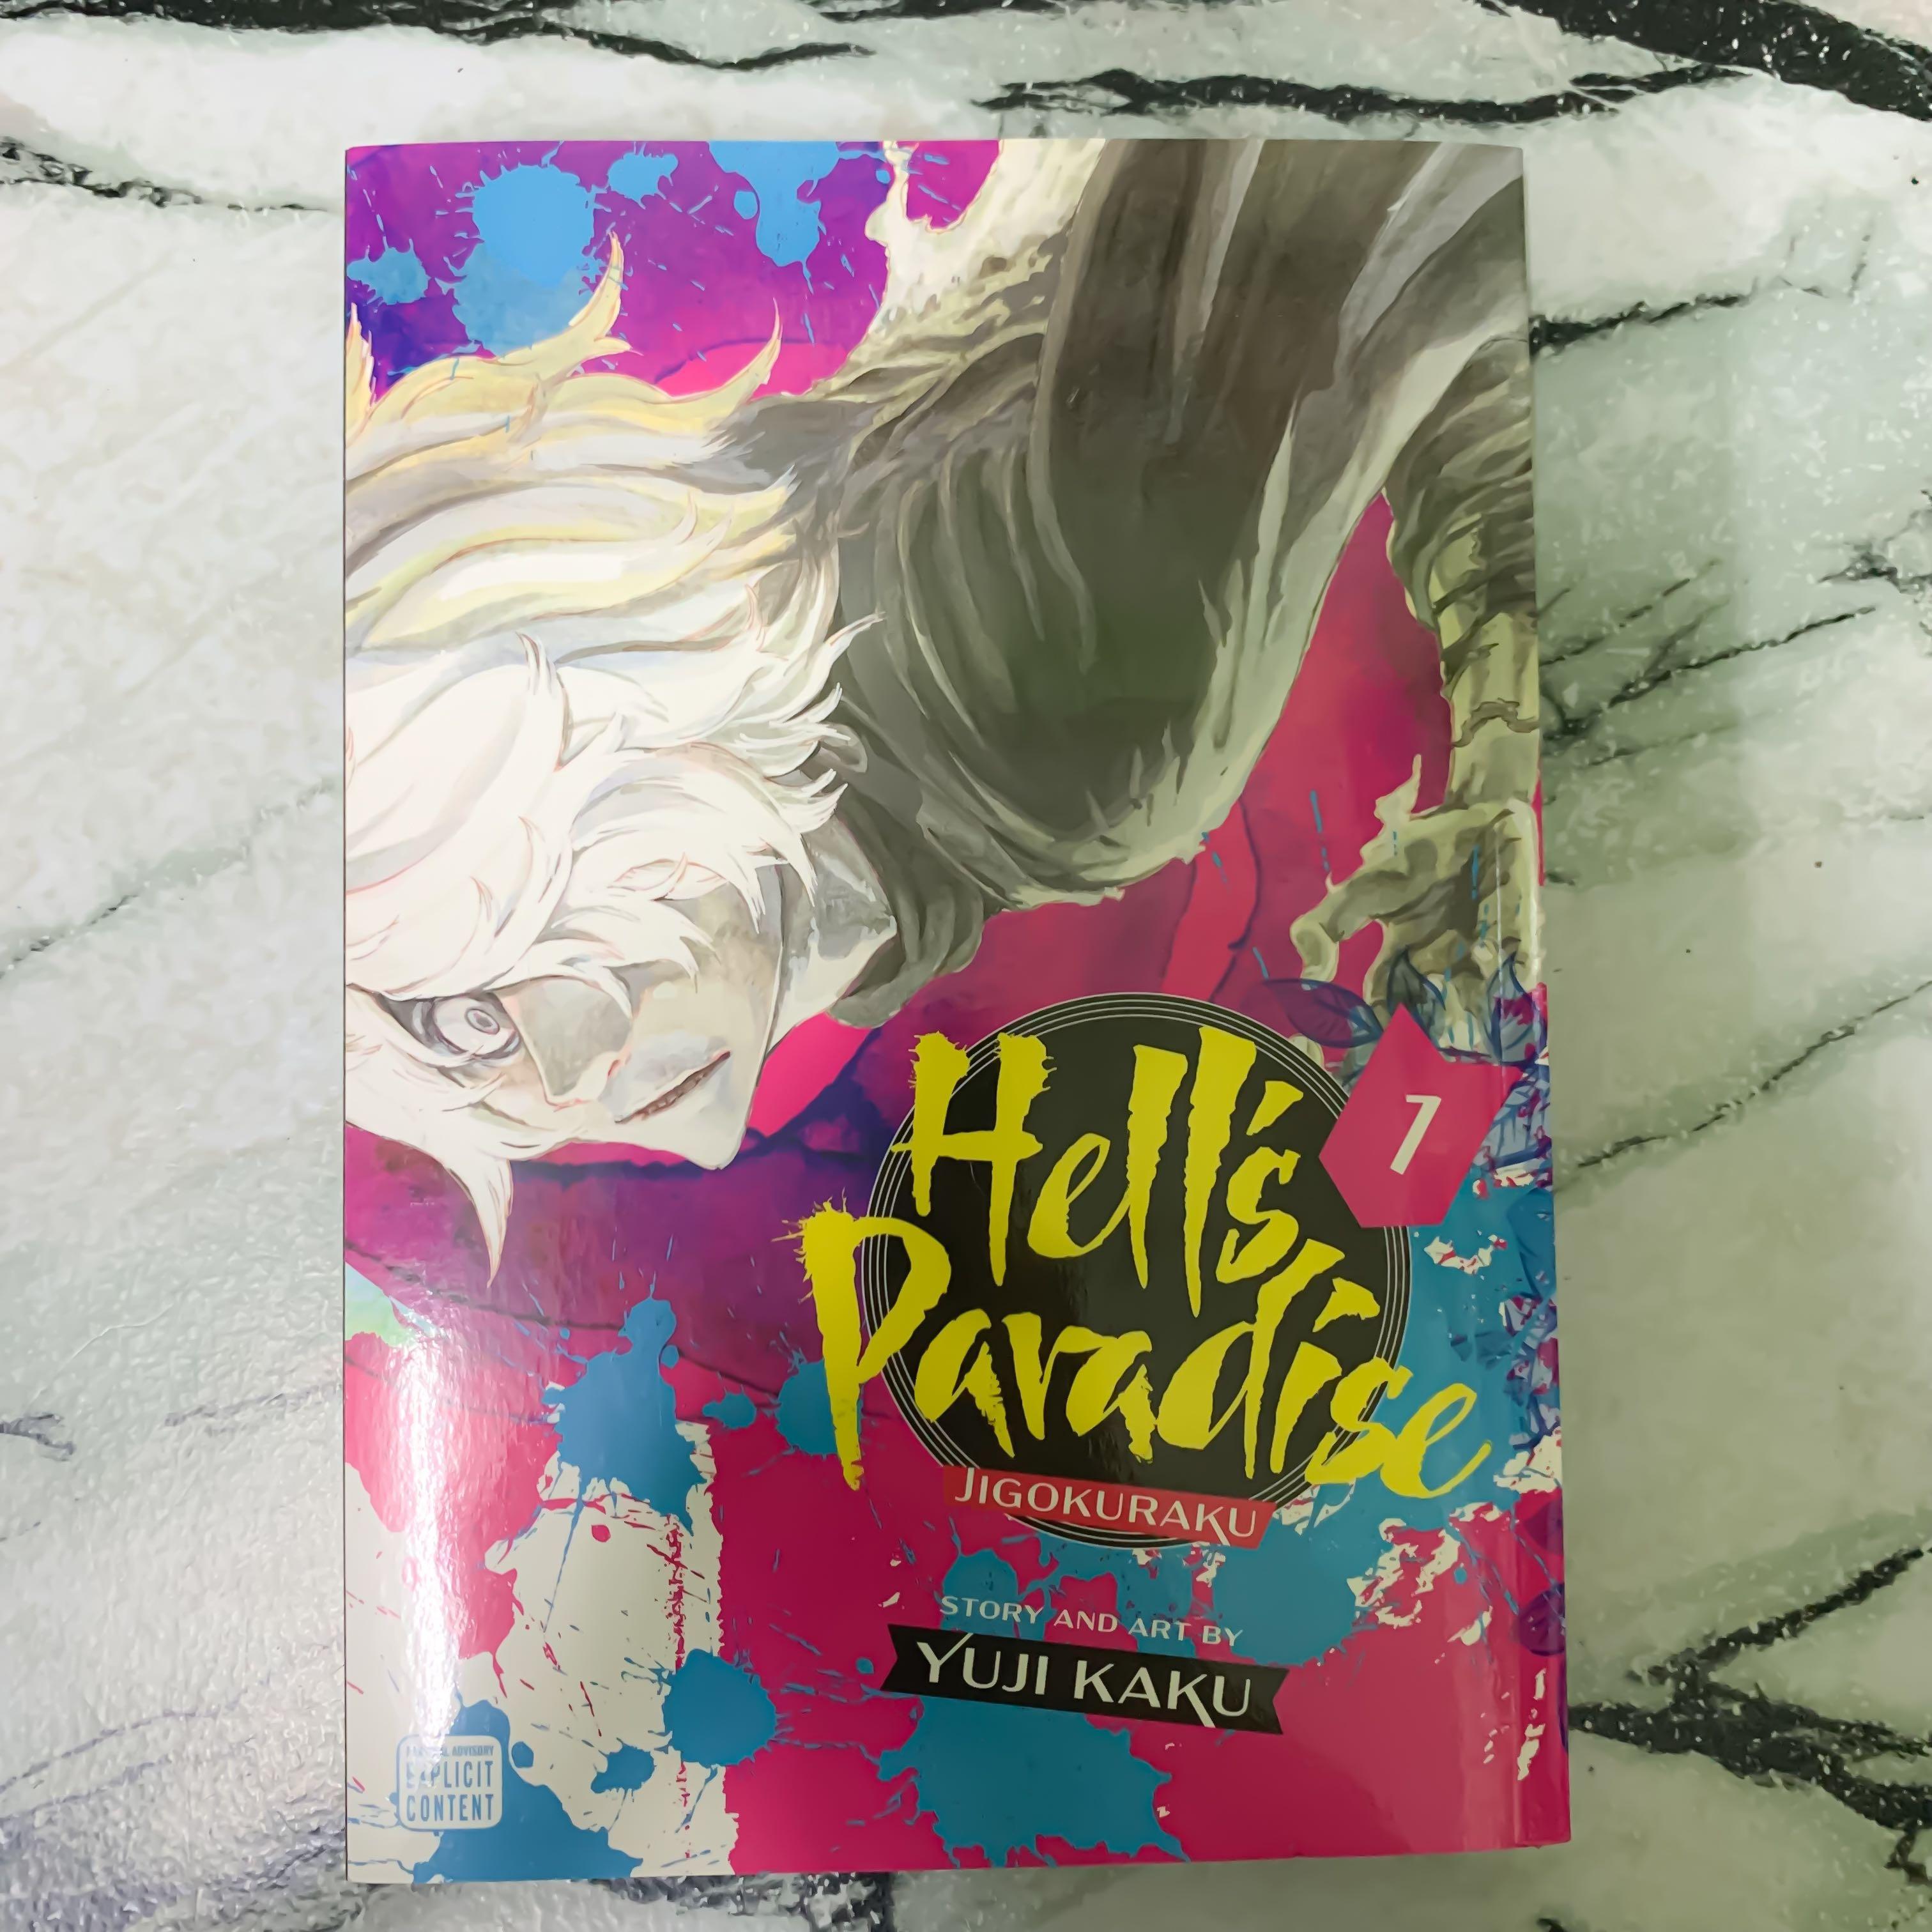 Hell's Paradise: Jigokuraku, Vol. 11 - By Yuji Kaku (paperback